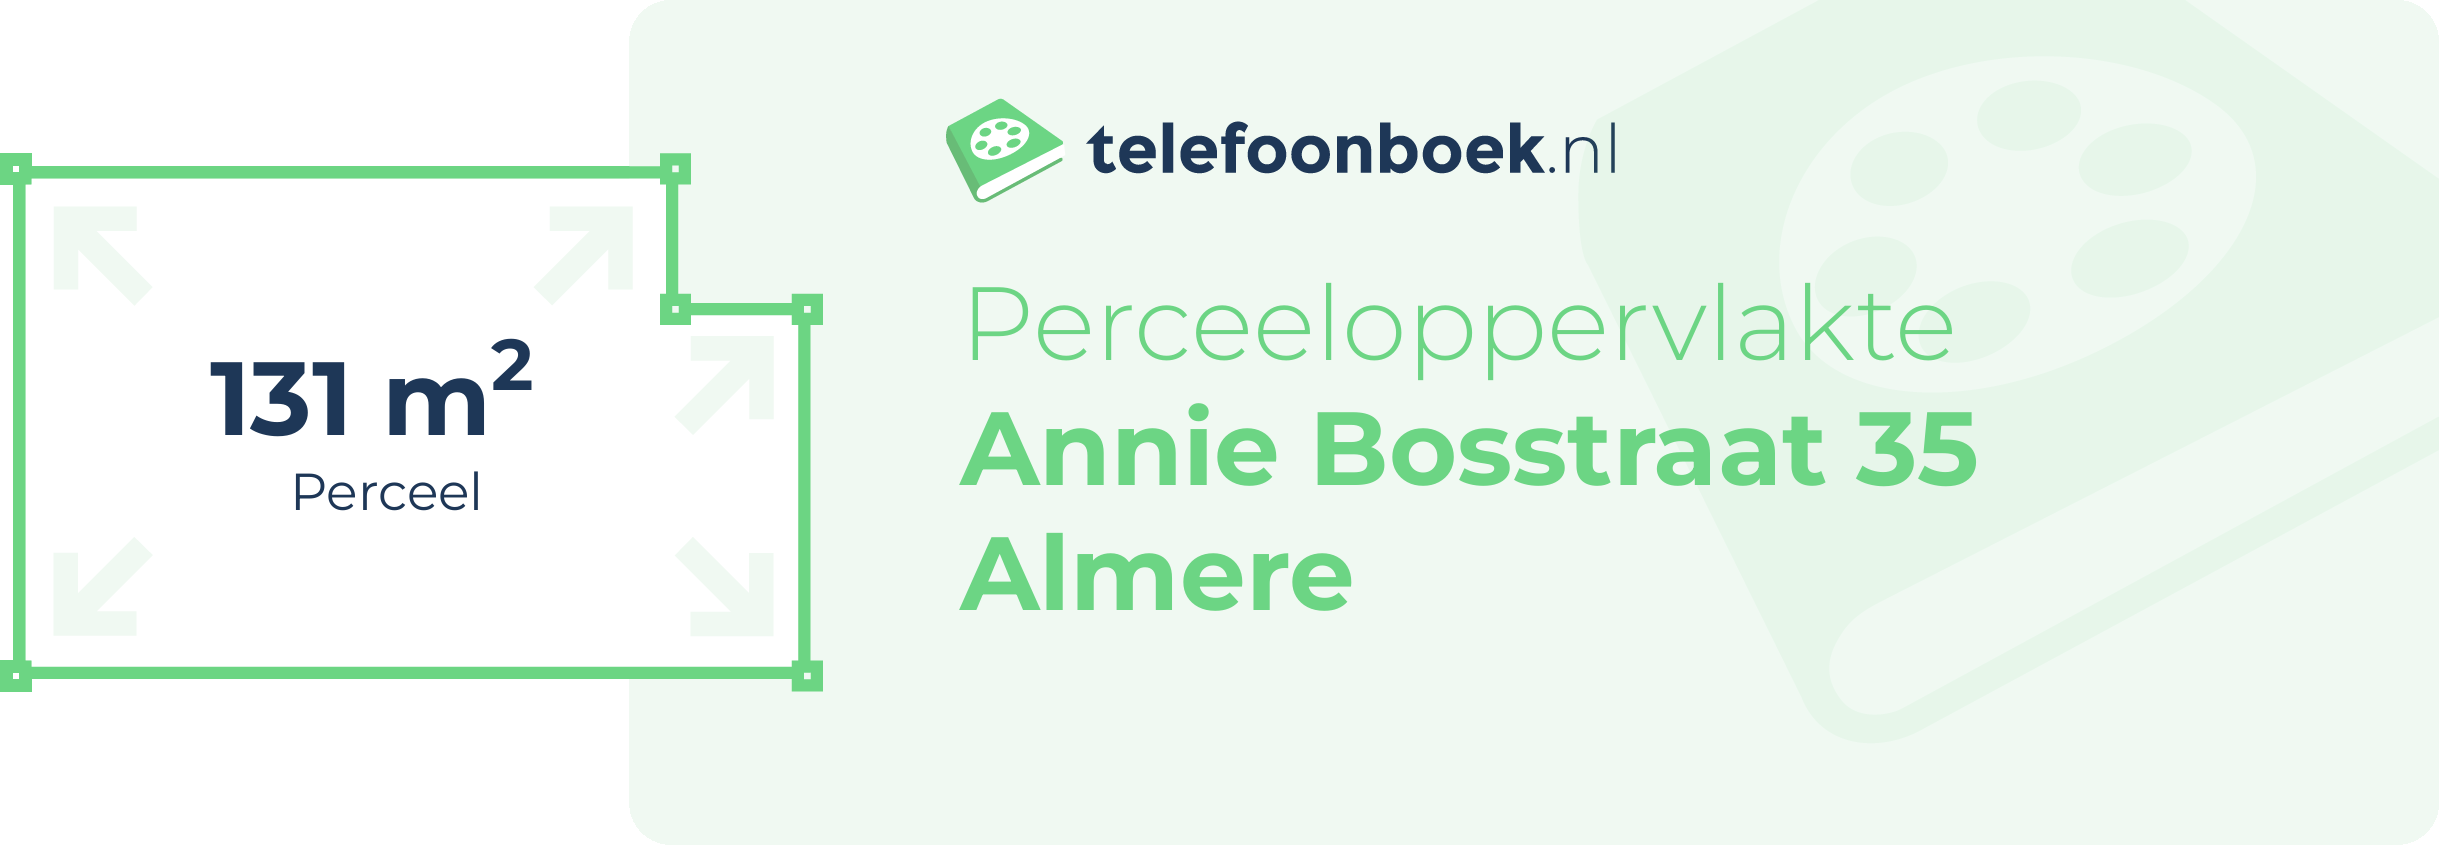 Perceeloppervlakte Annie Bosstraat 35 Almere